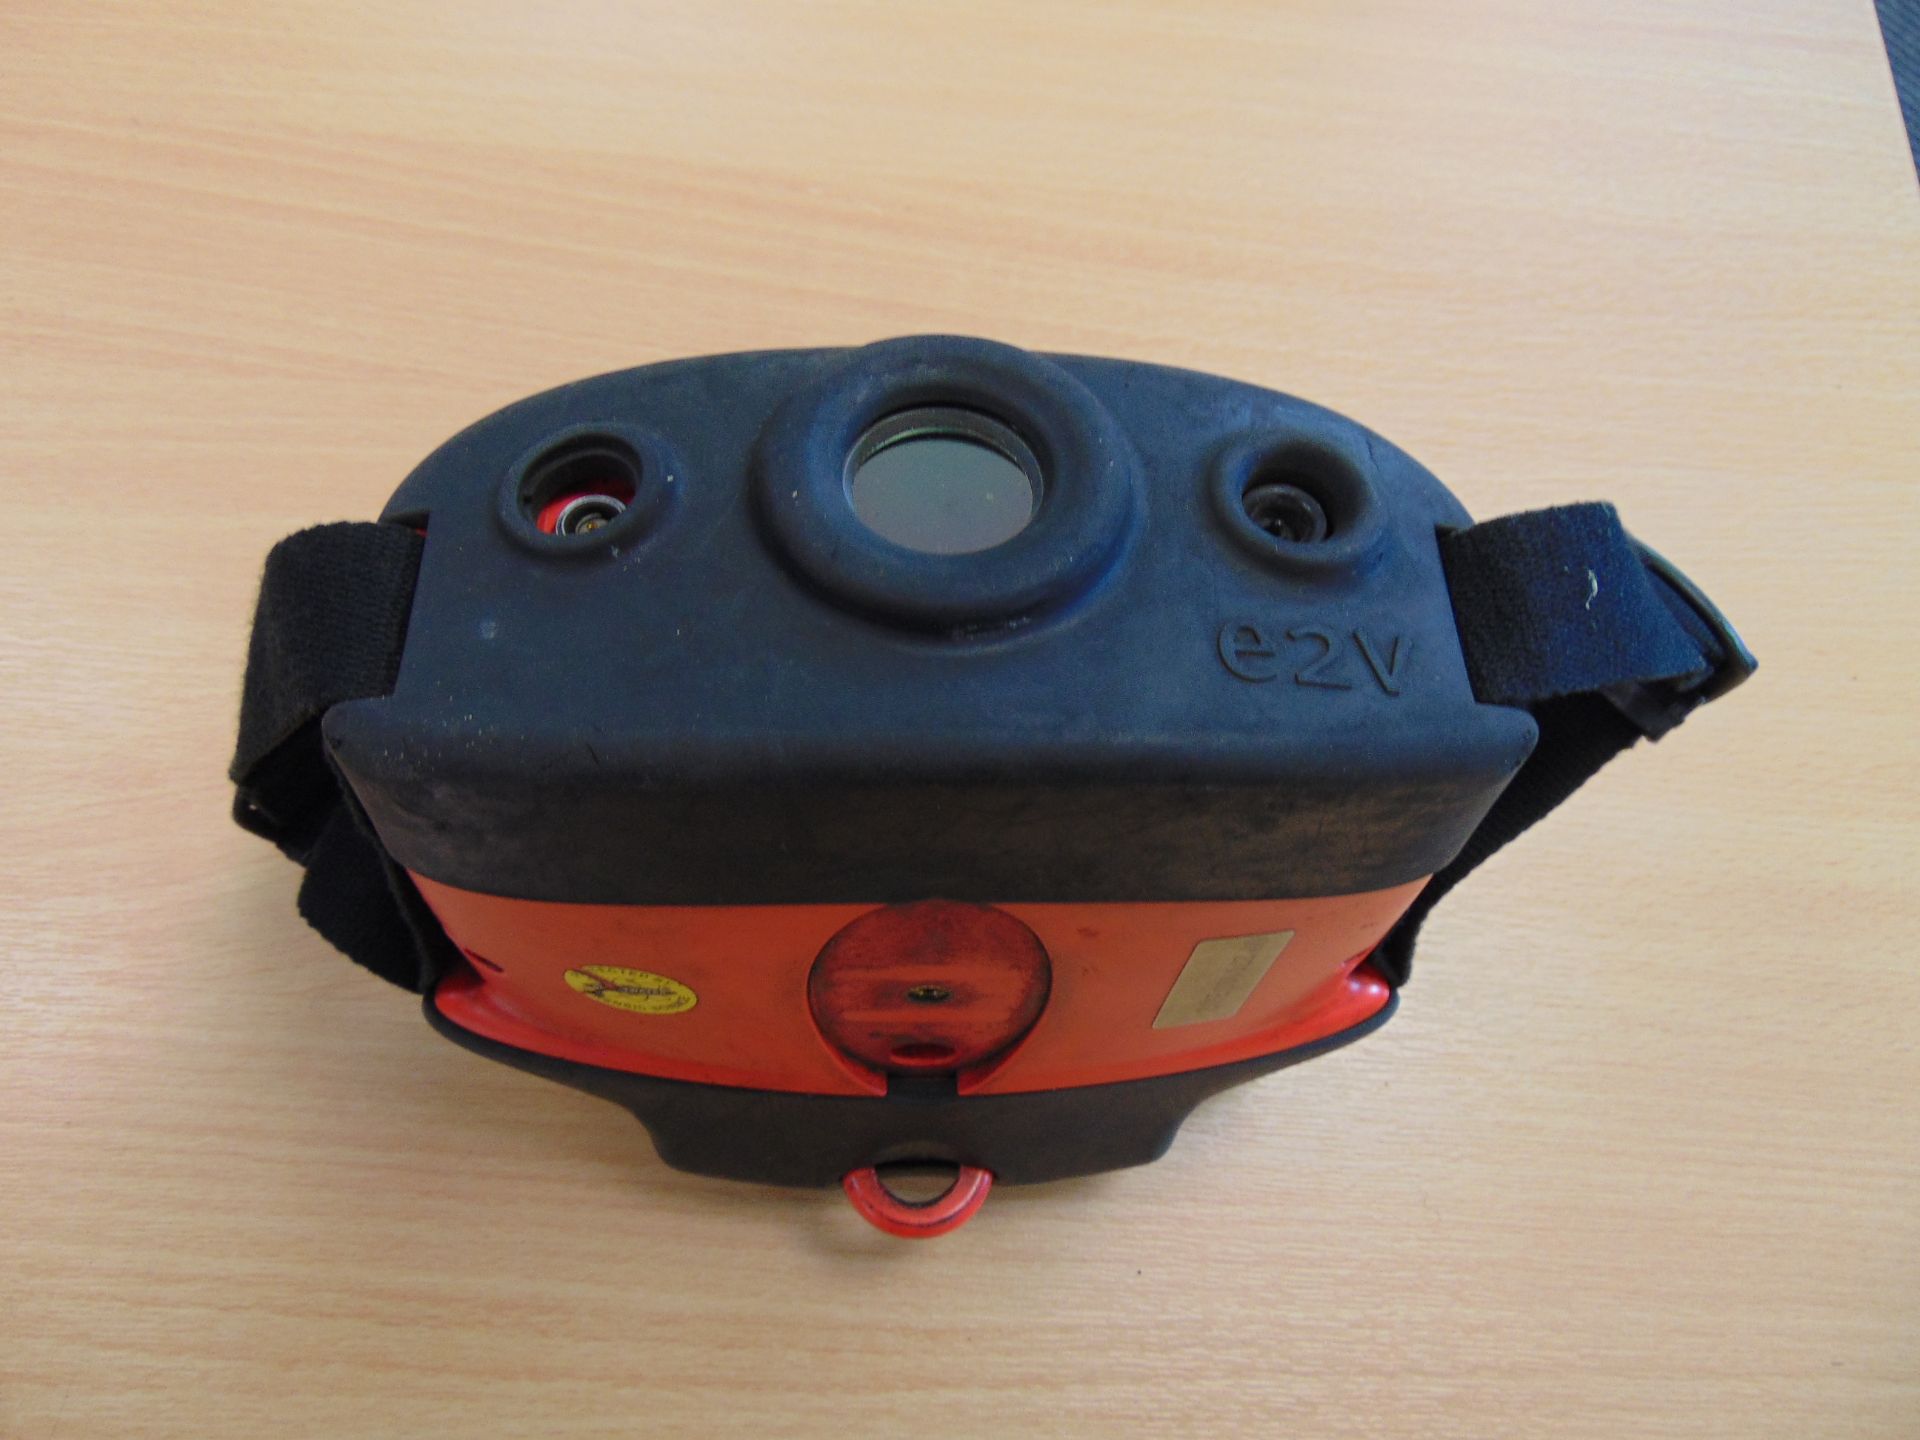 Argus 4 E2V Thermal Imaging Camera - Image 4 of 4